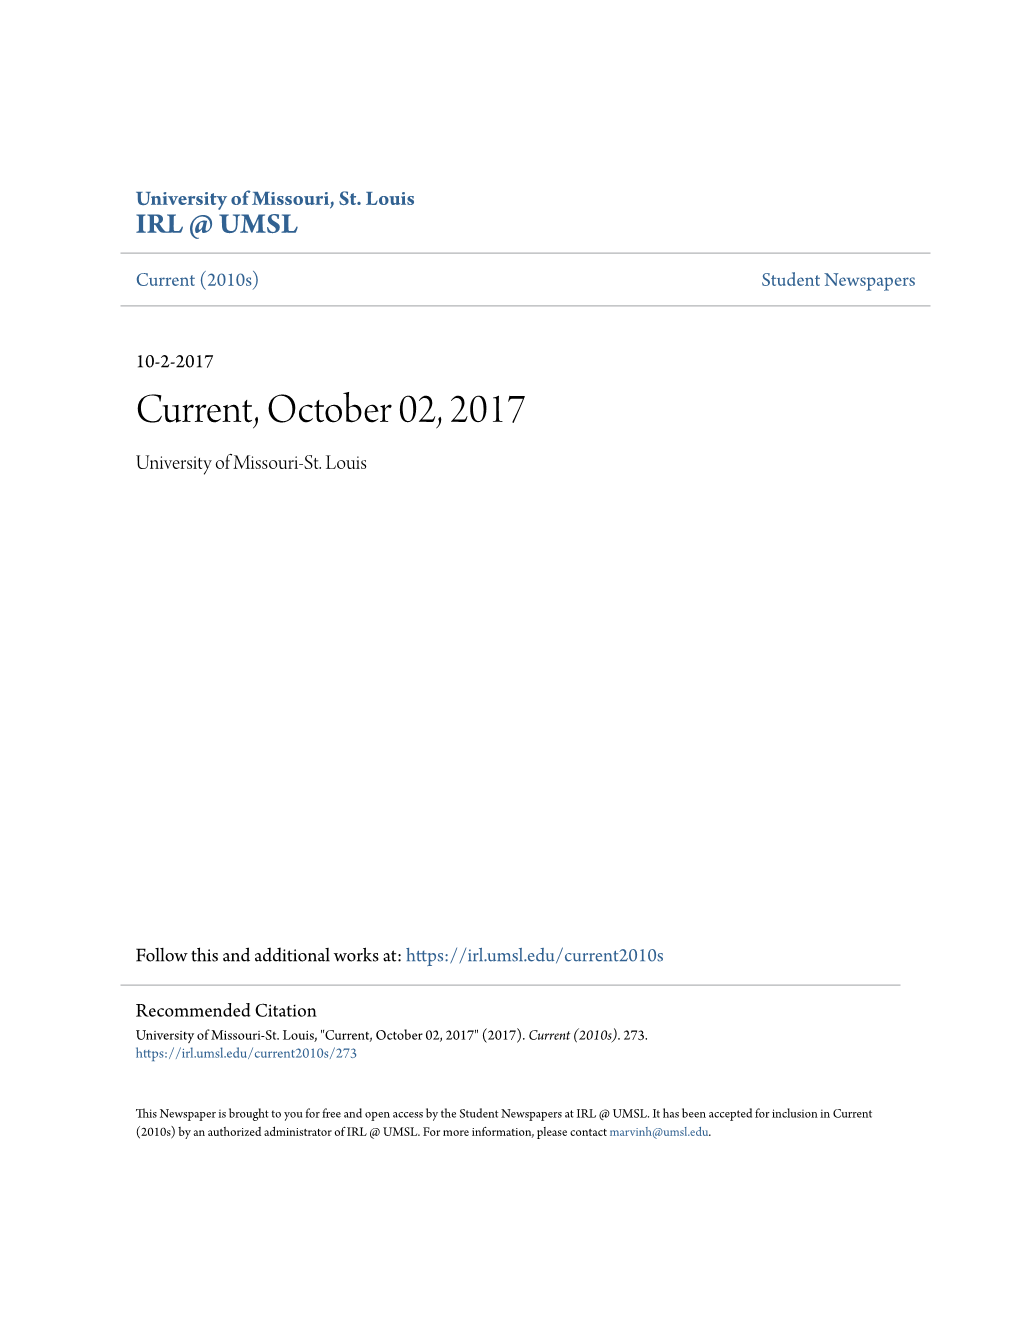 Current, October 02, 2017 University of Missouri-St